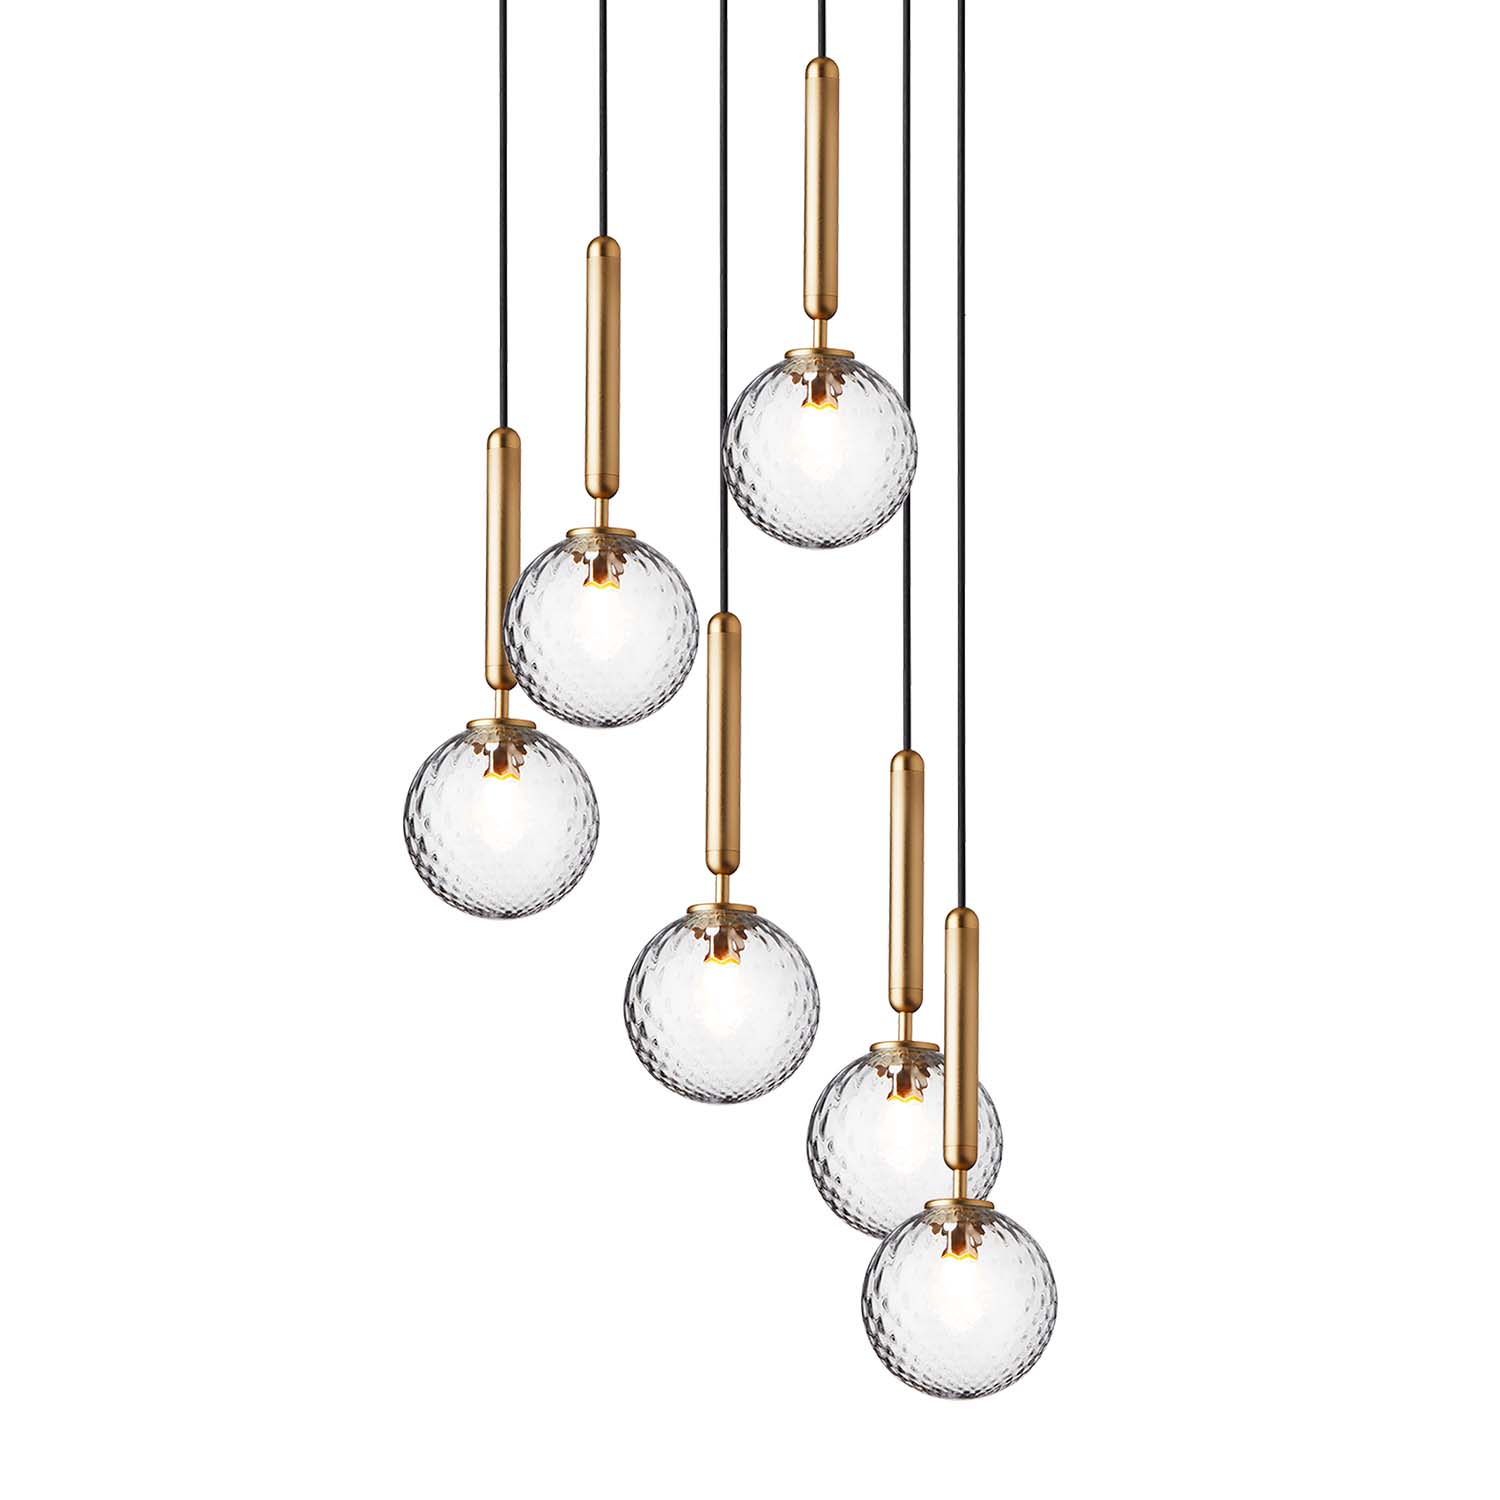 MIIRA 6 Optic - Large high-end elegant chandelier for high ceilings